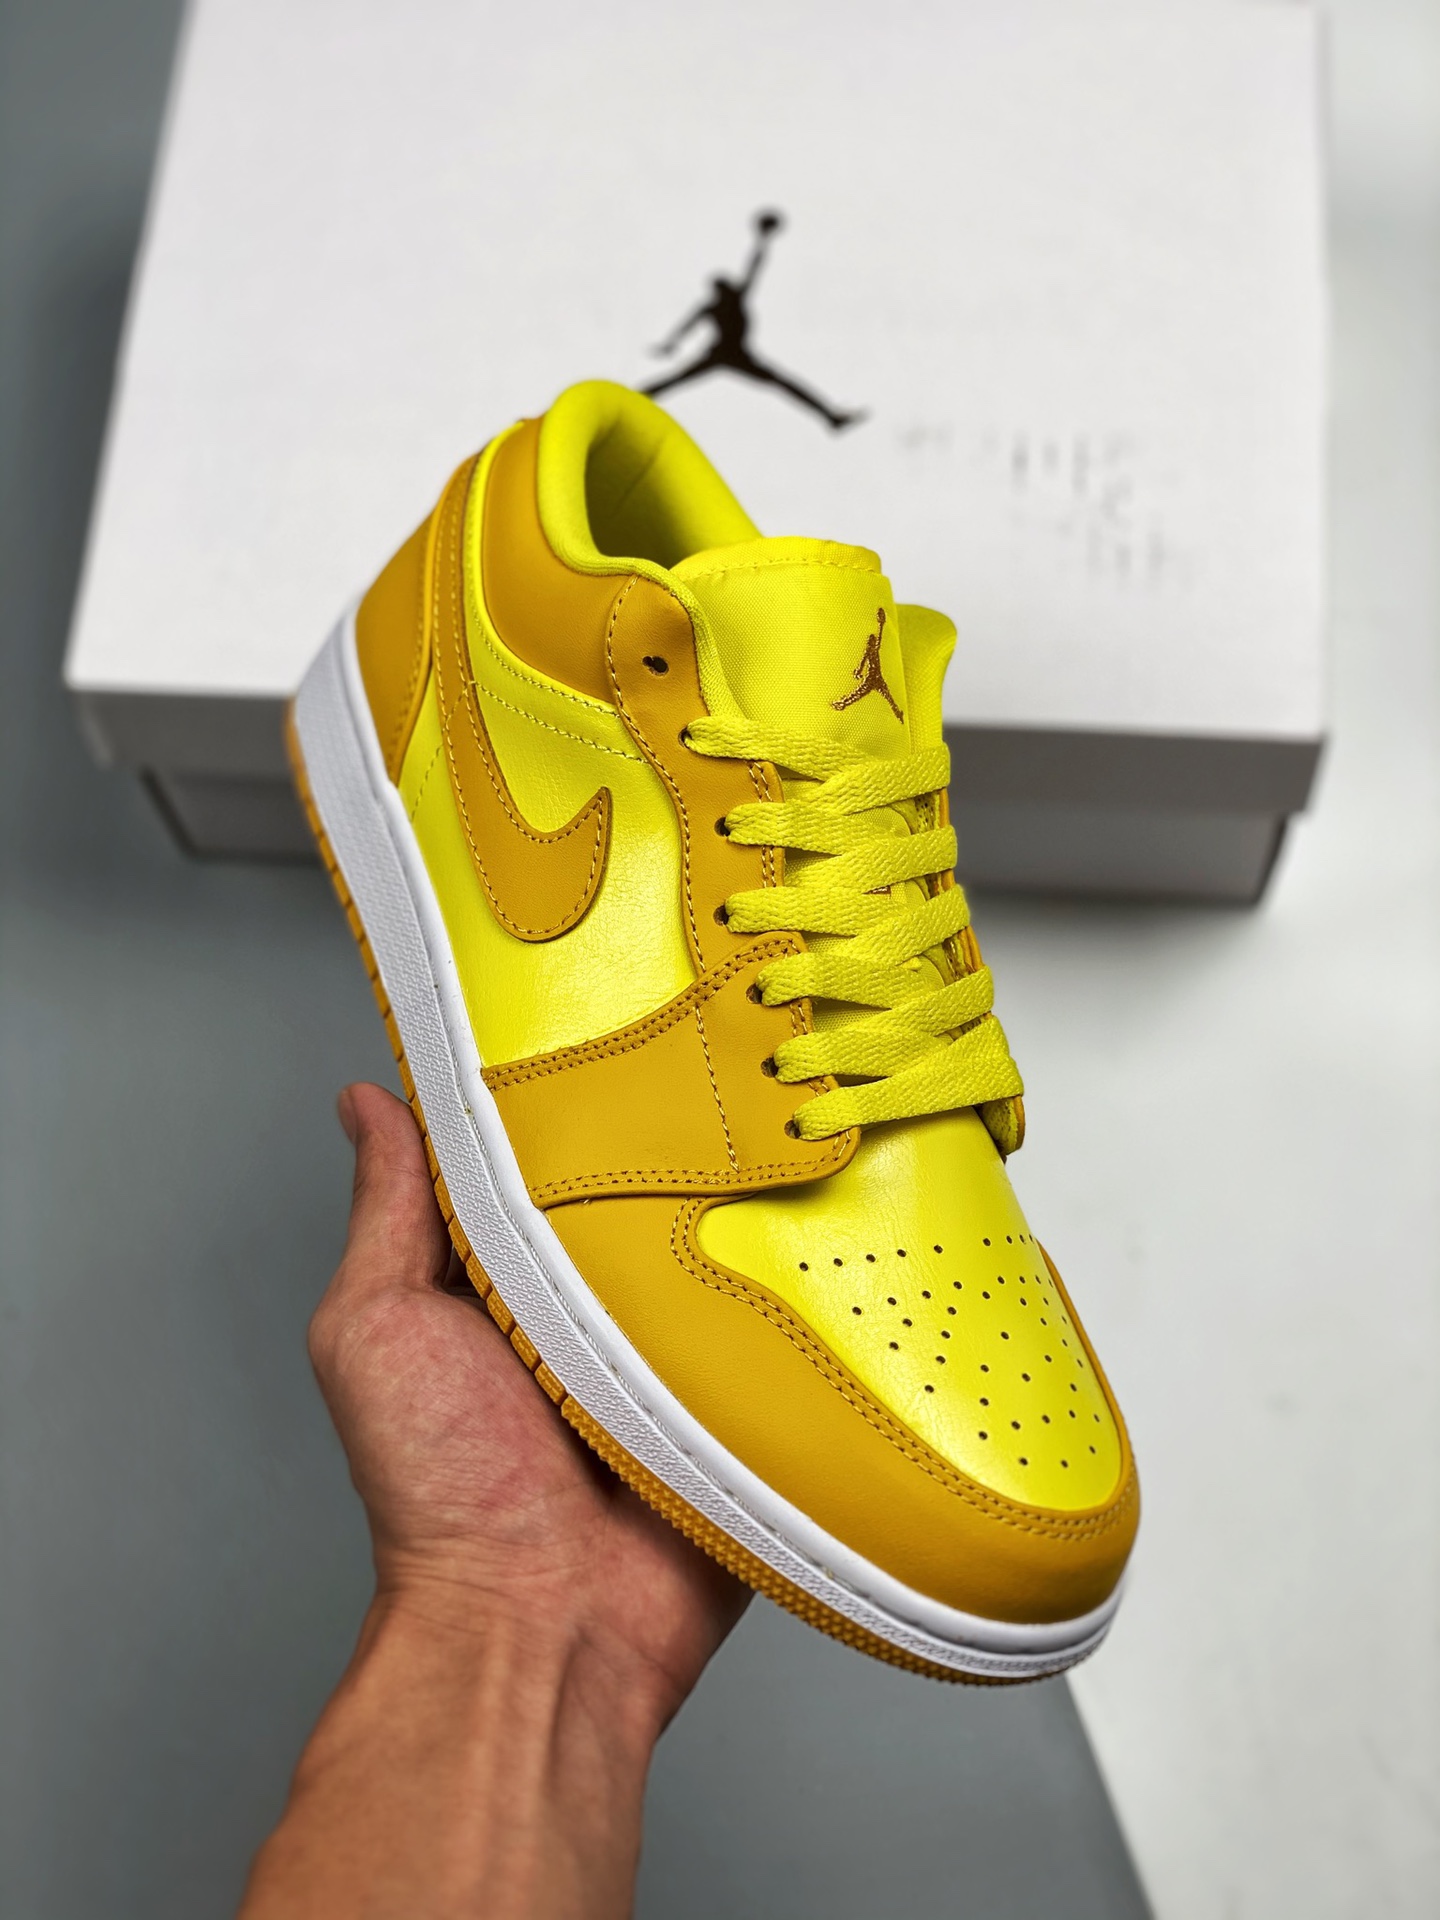 Air JD Jordan 1 Low Yellow Gold DC0774-700 Shoes